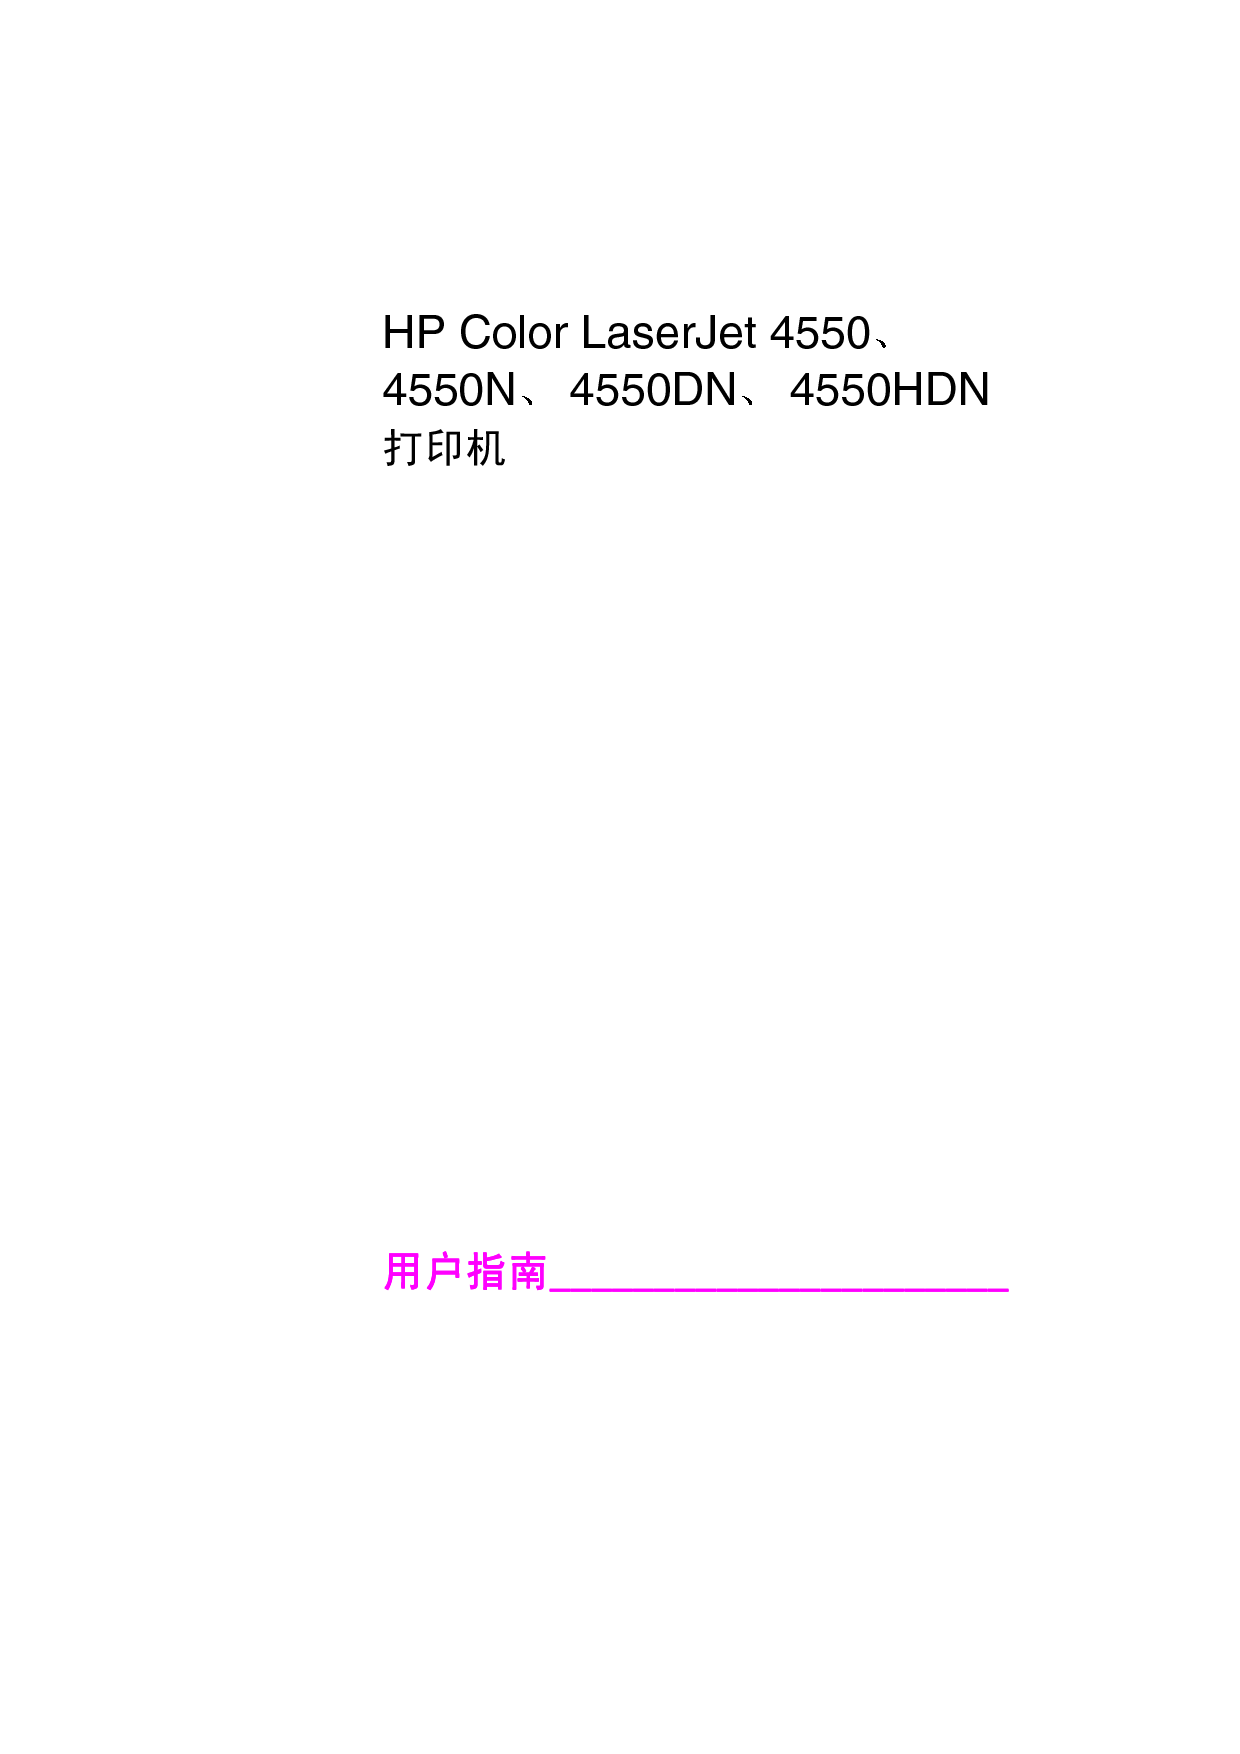 惠普 HP Color LaserJet 4550 用户指南 第2页